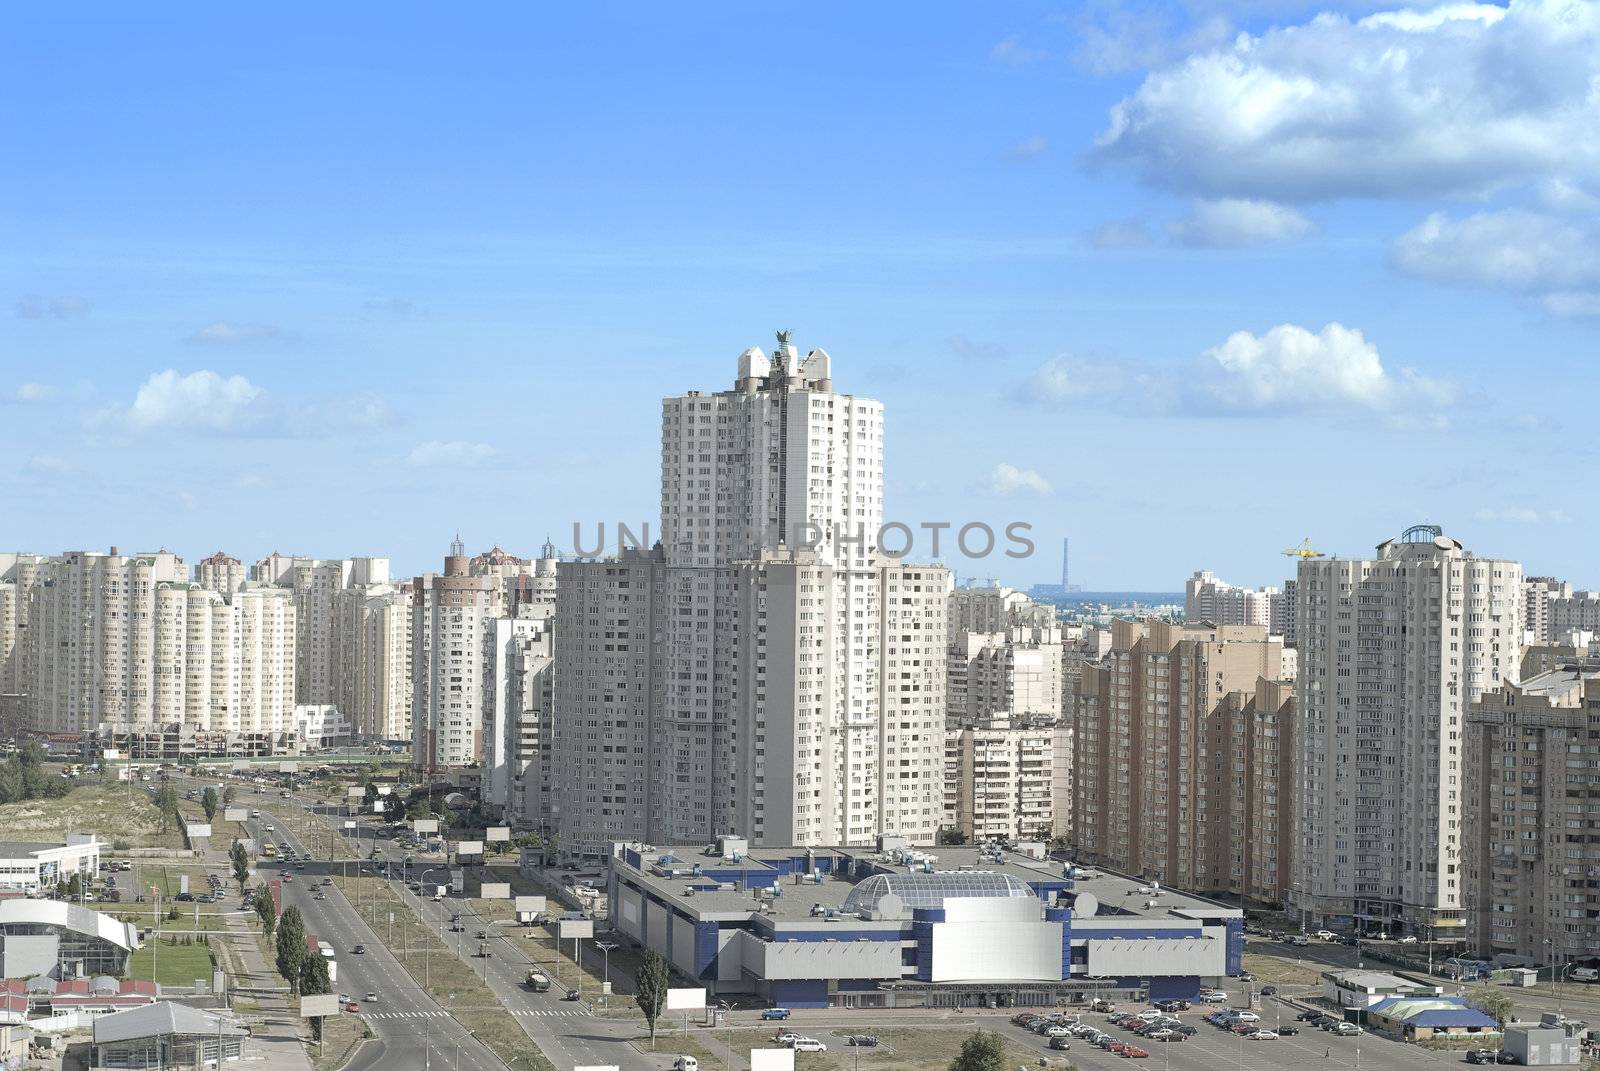 white fancy apartment buildings in residential settlement